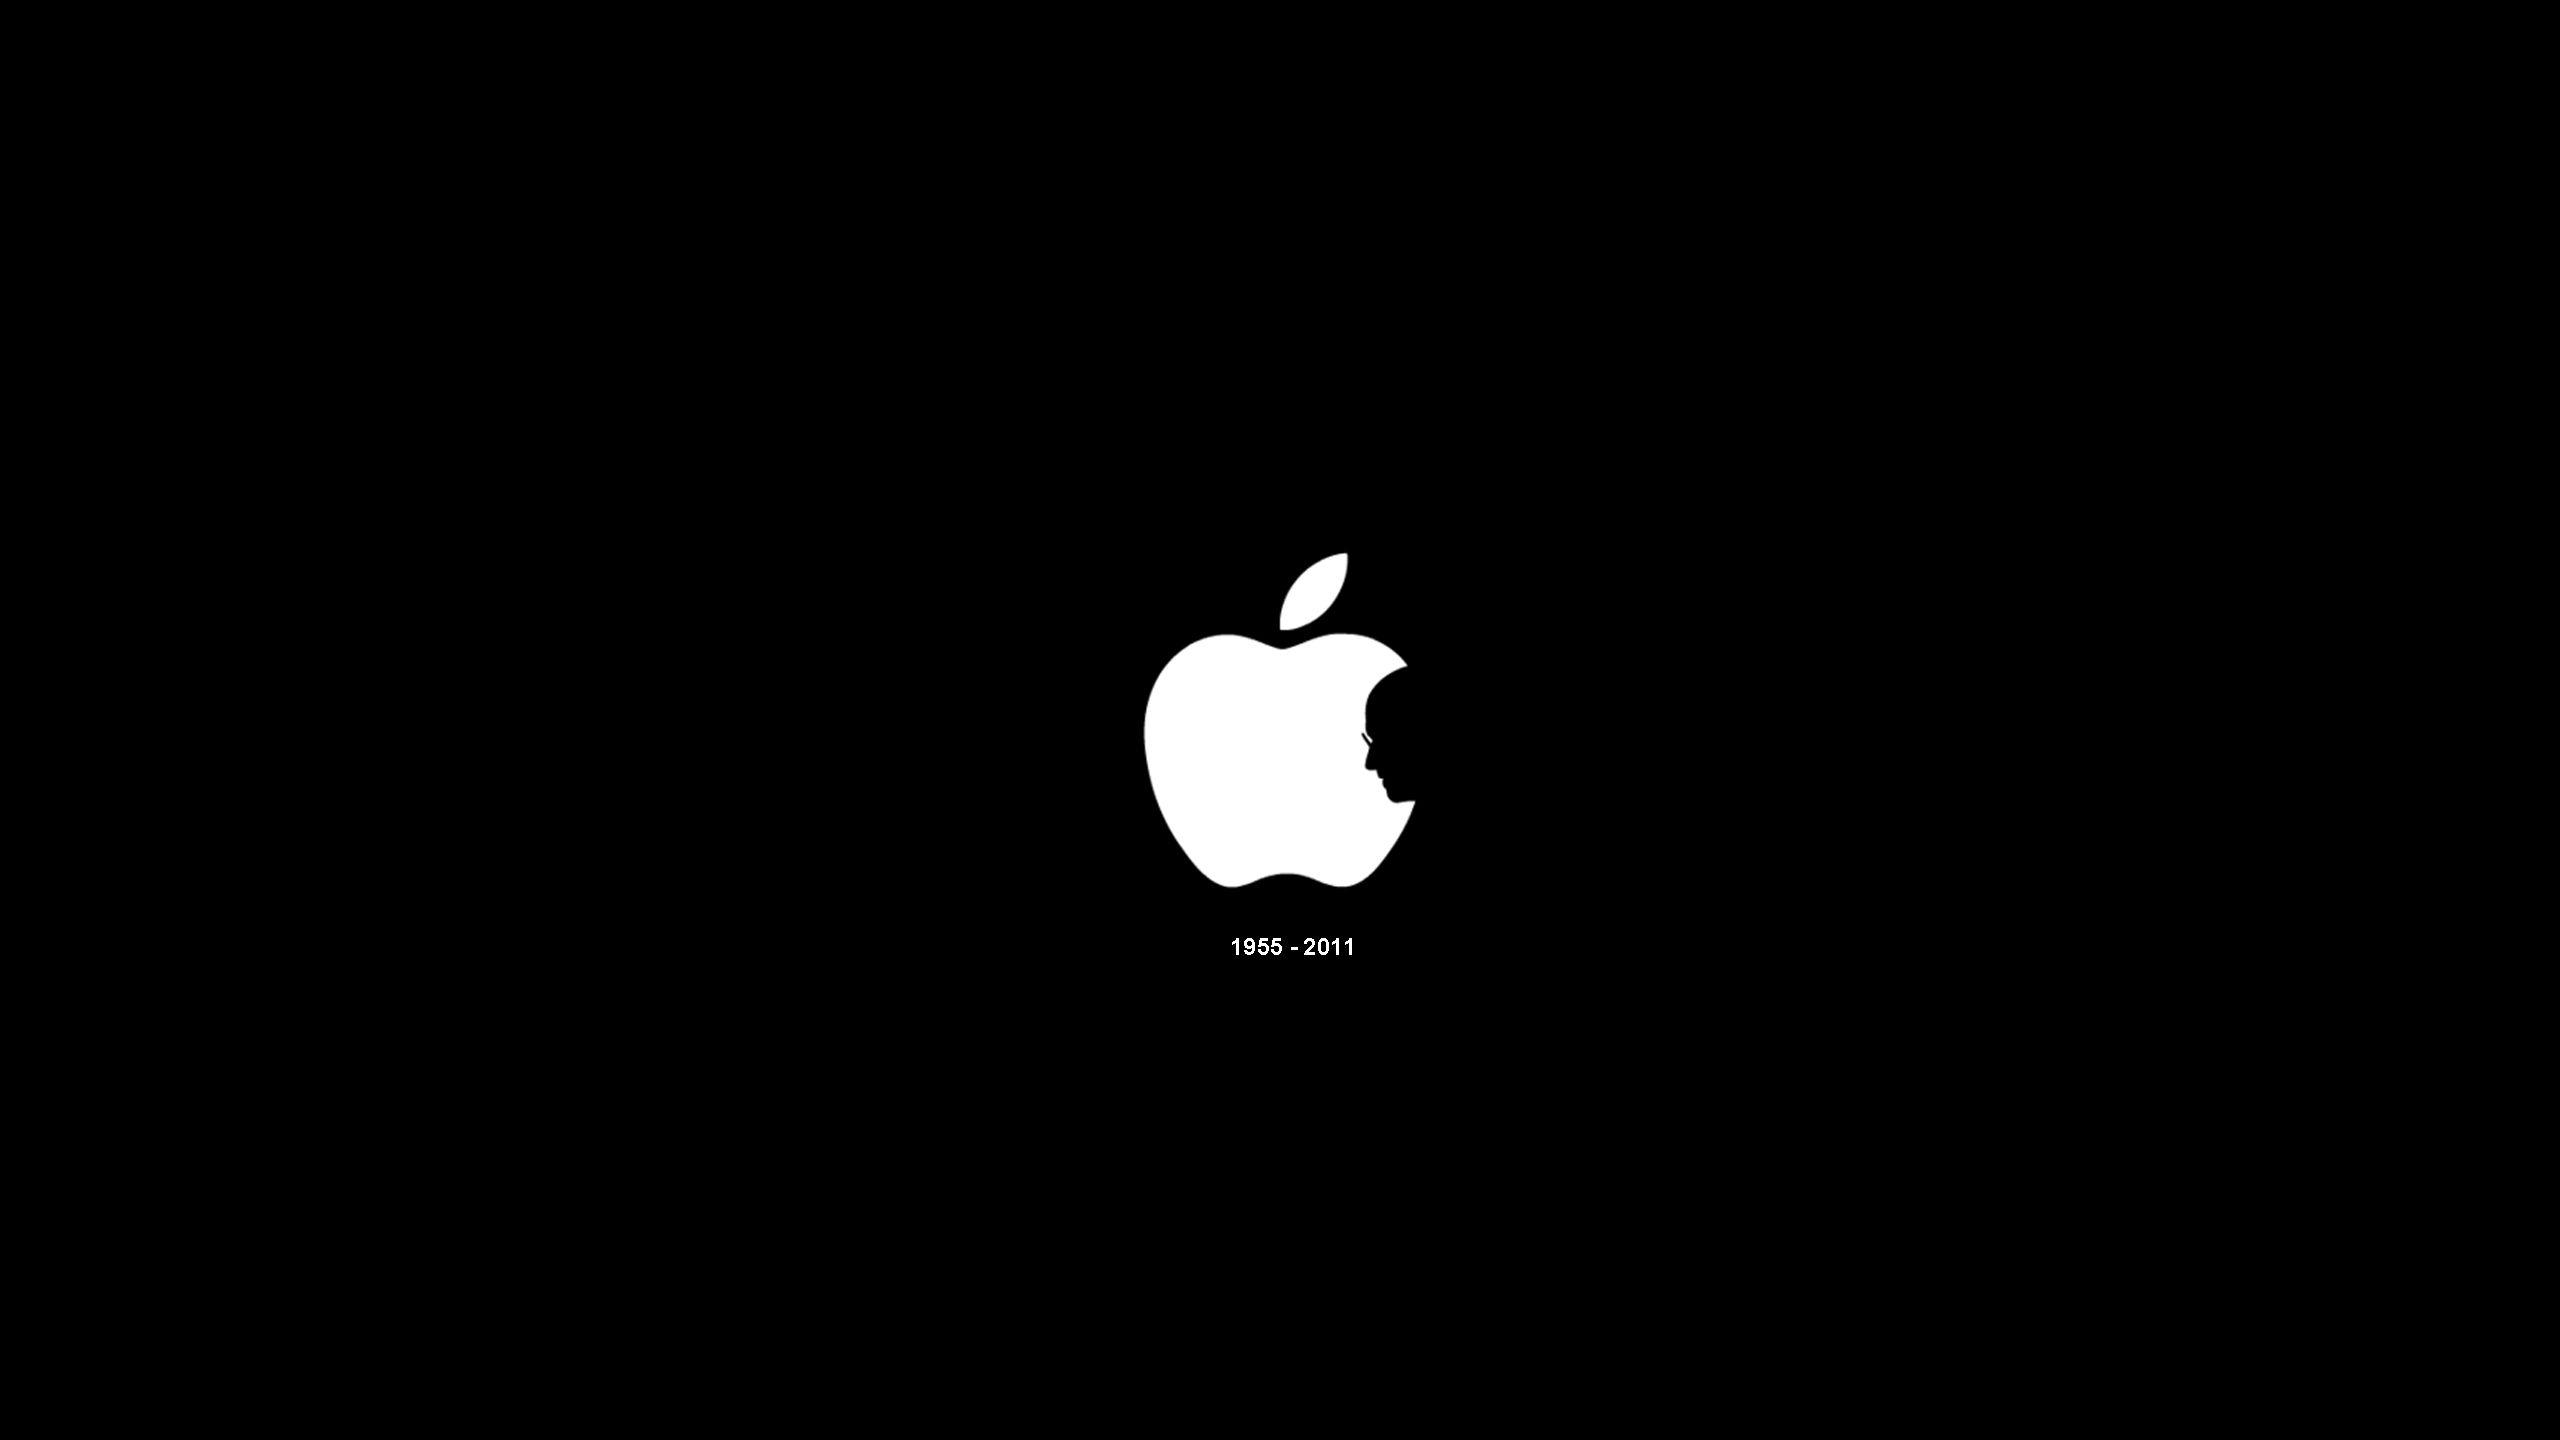 Steve Jobs RIP desktop PC and Mac wallpaper